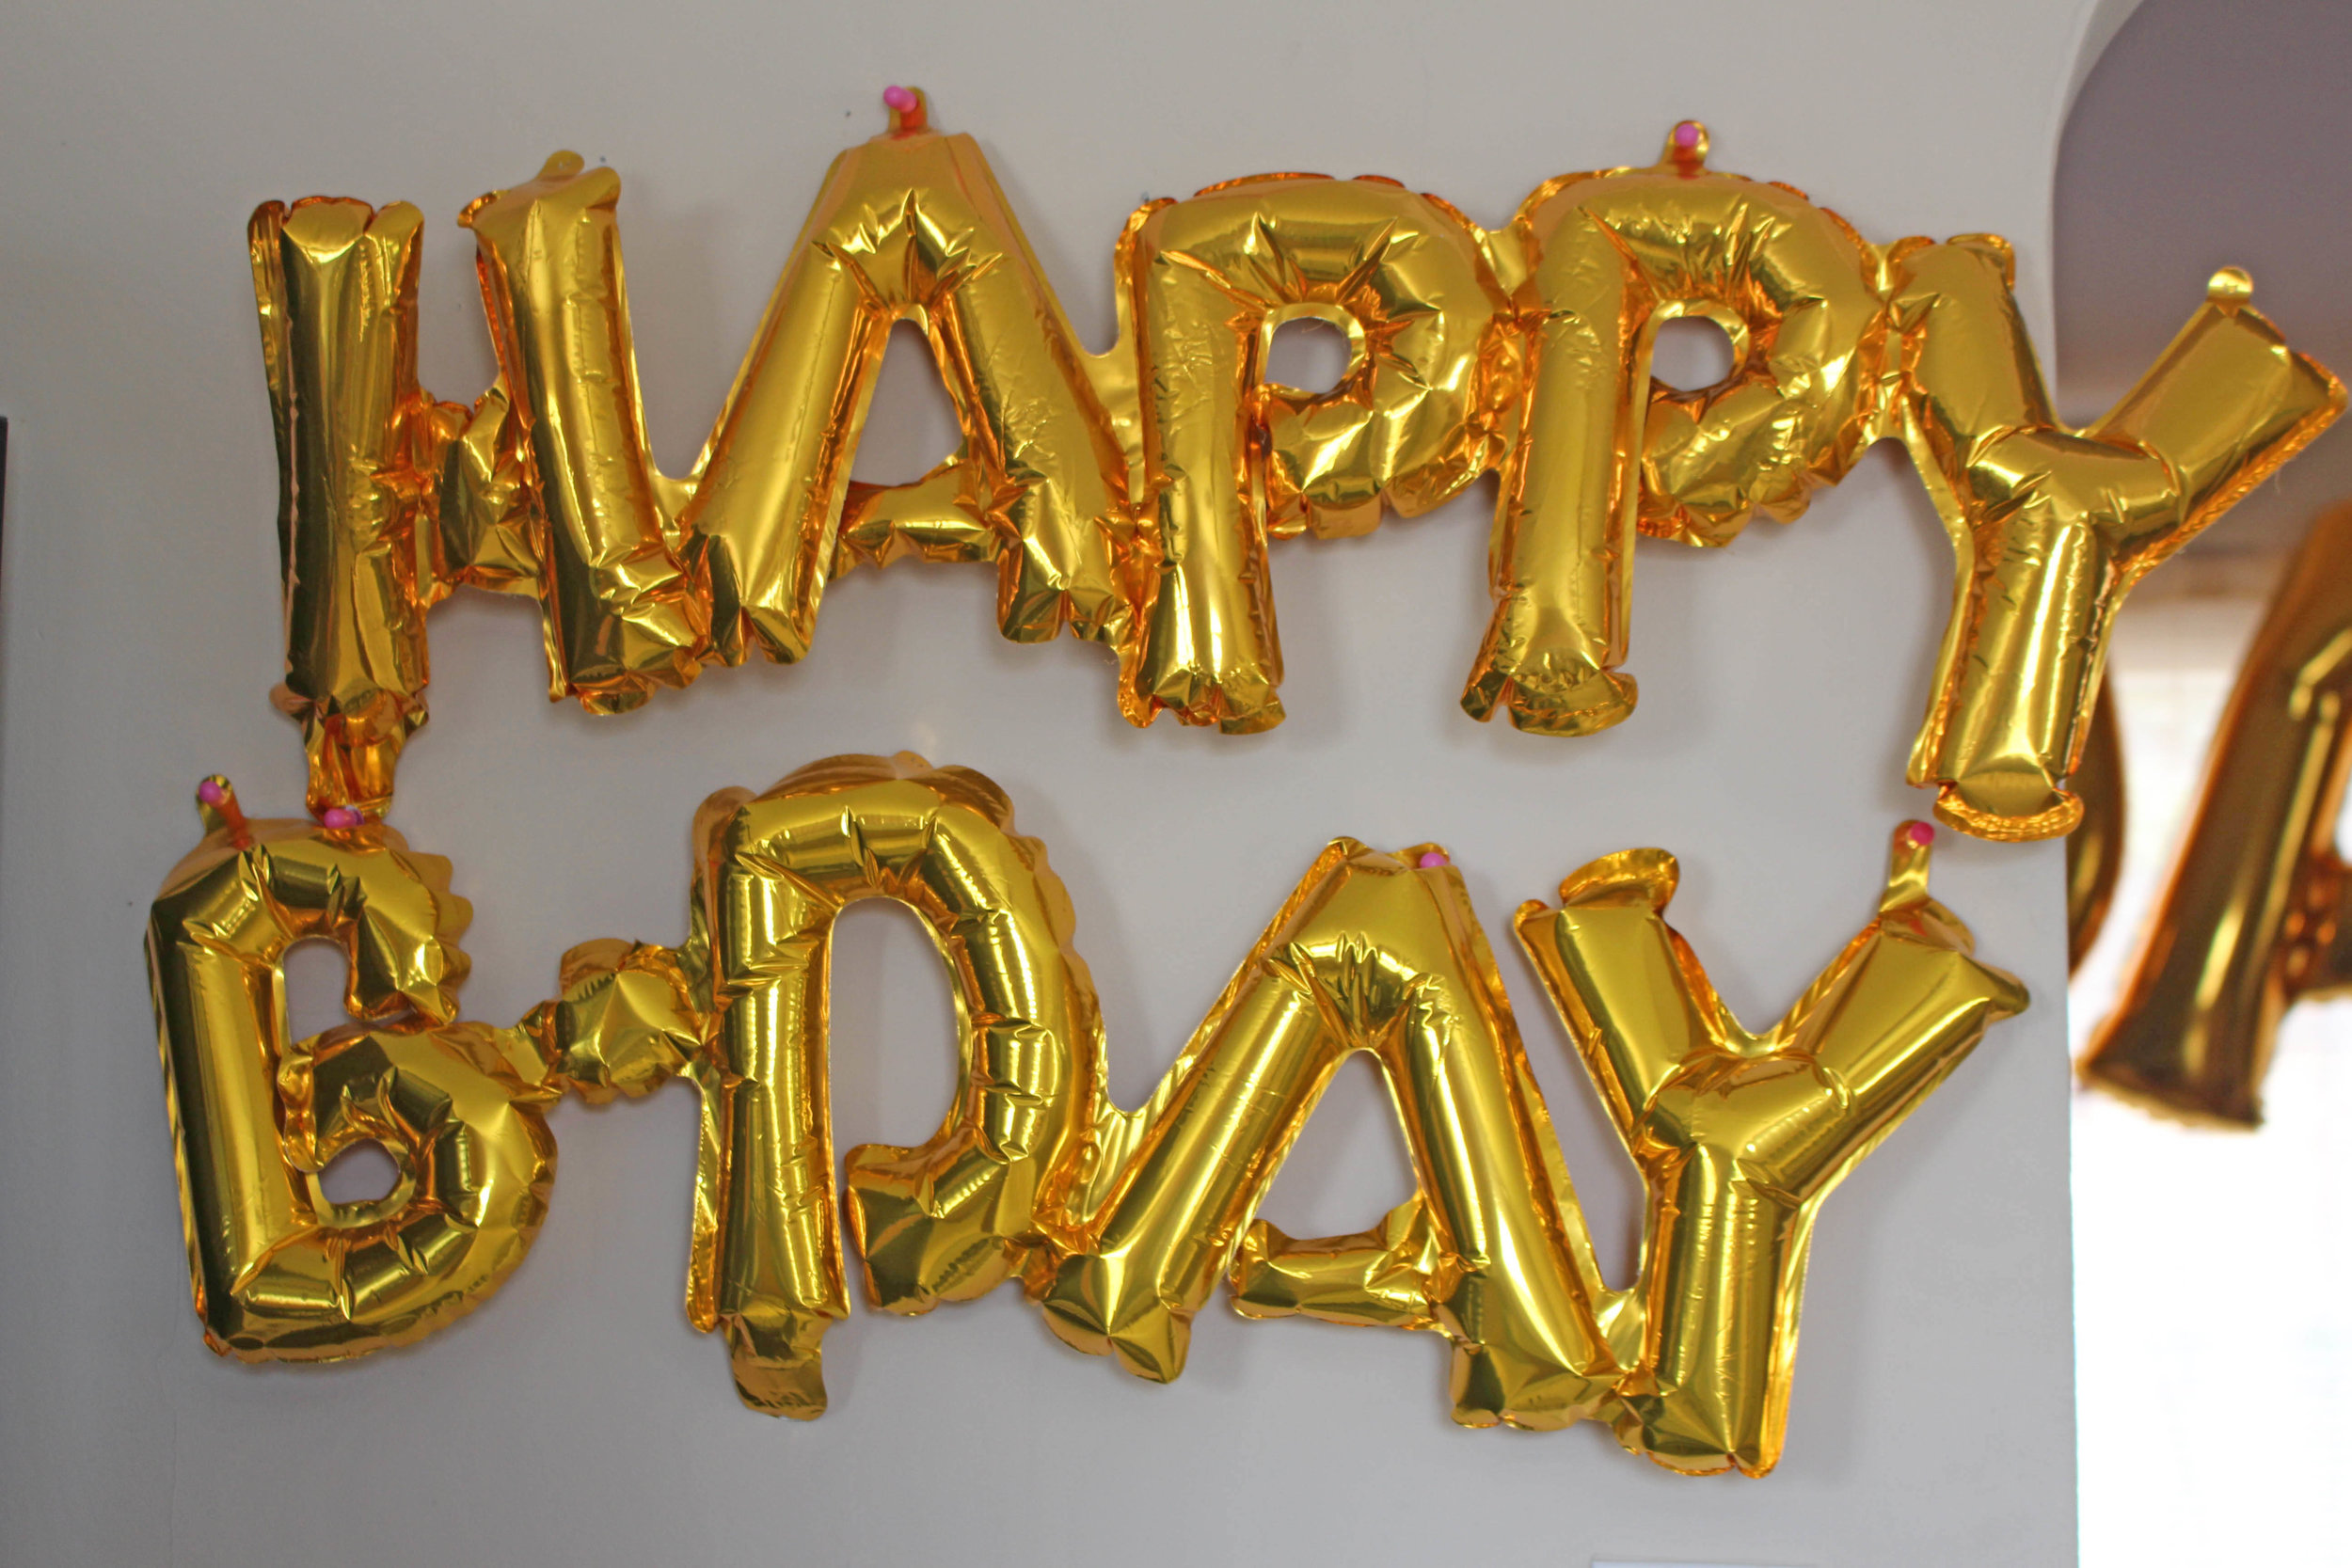  small latex "happy bday" balloons for first birthday | Pish Posh Perfect 